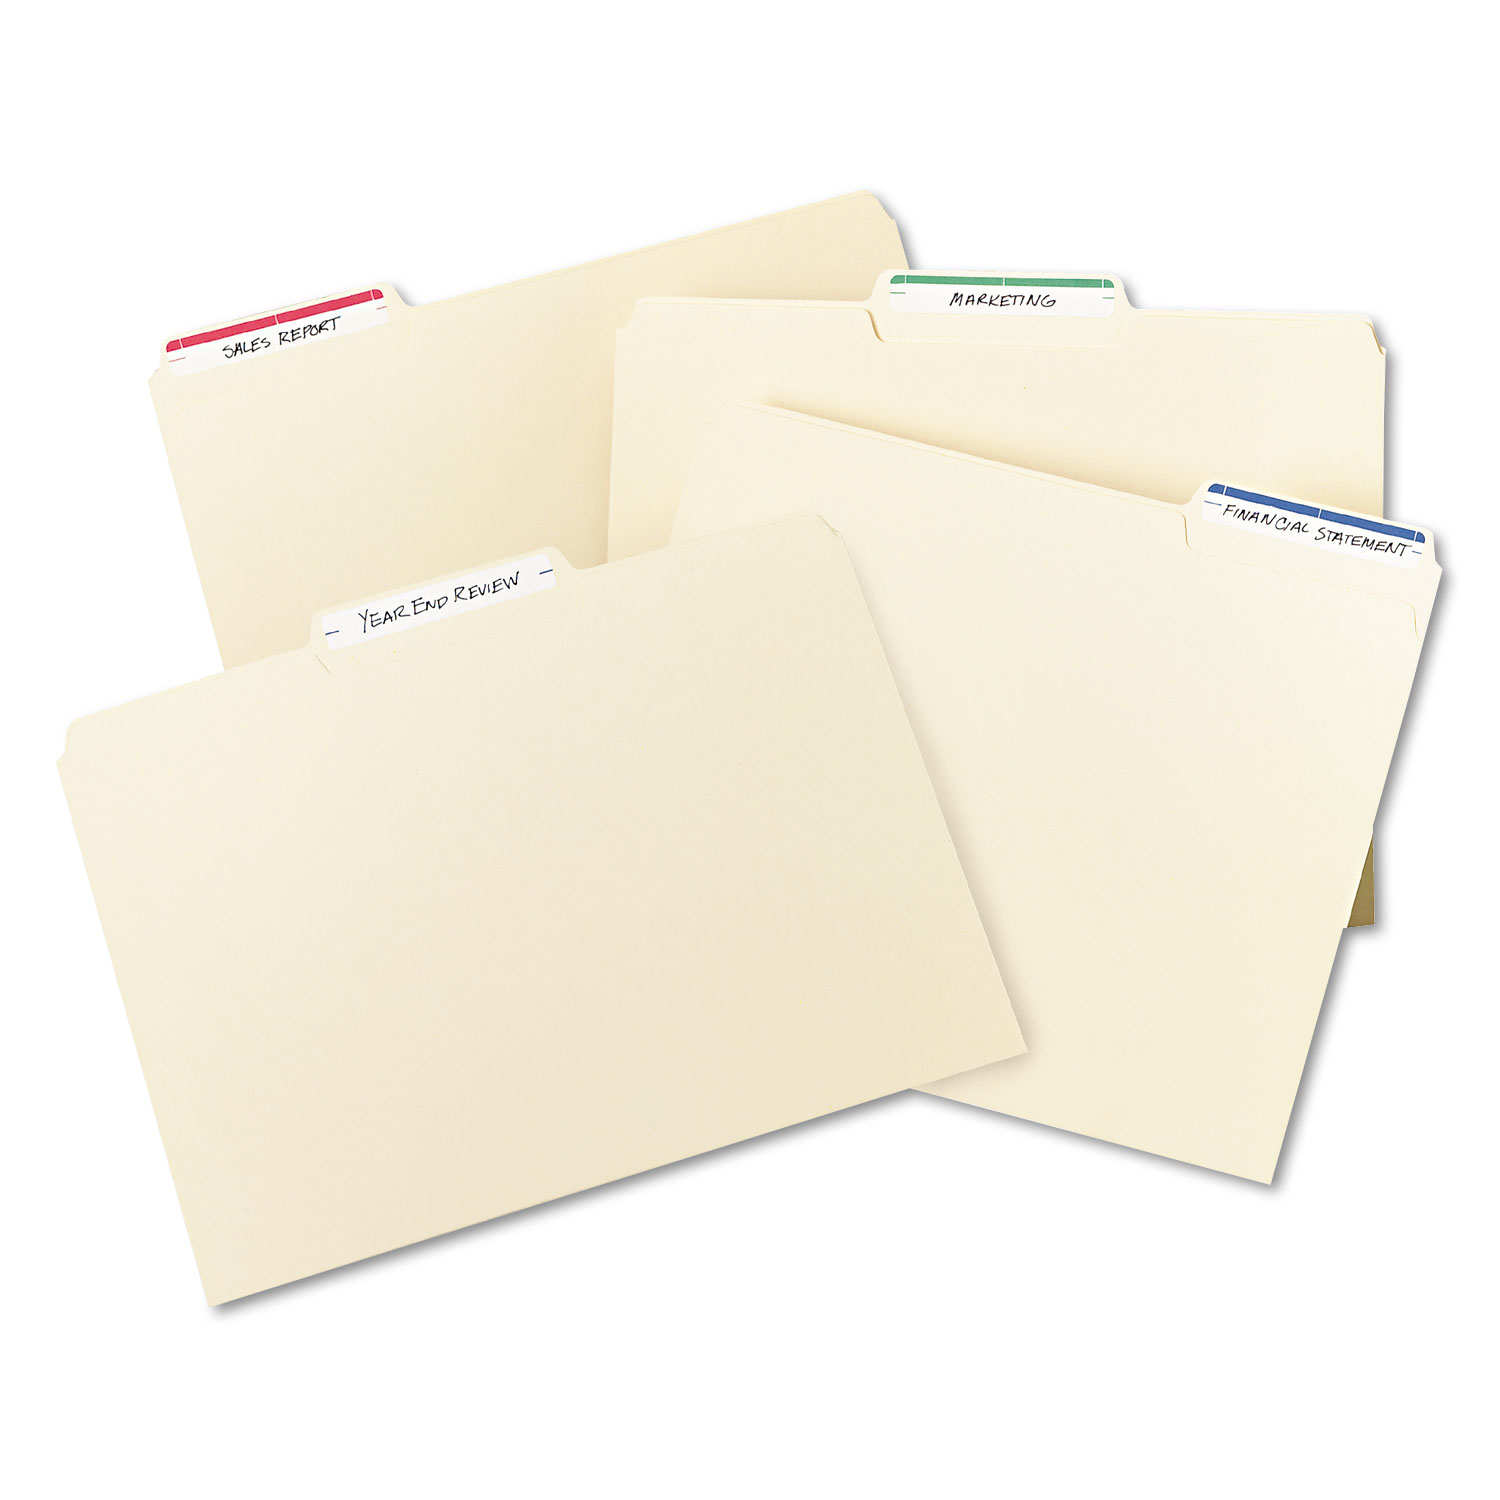 Print or Write File Folder Labels, 11/16 x 3 7/16, White/Dark Blue Bar, 252/Pack